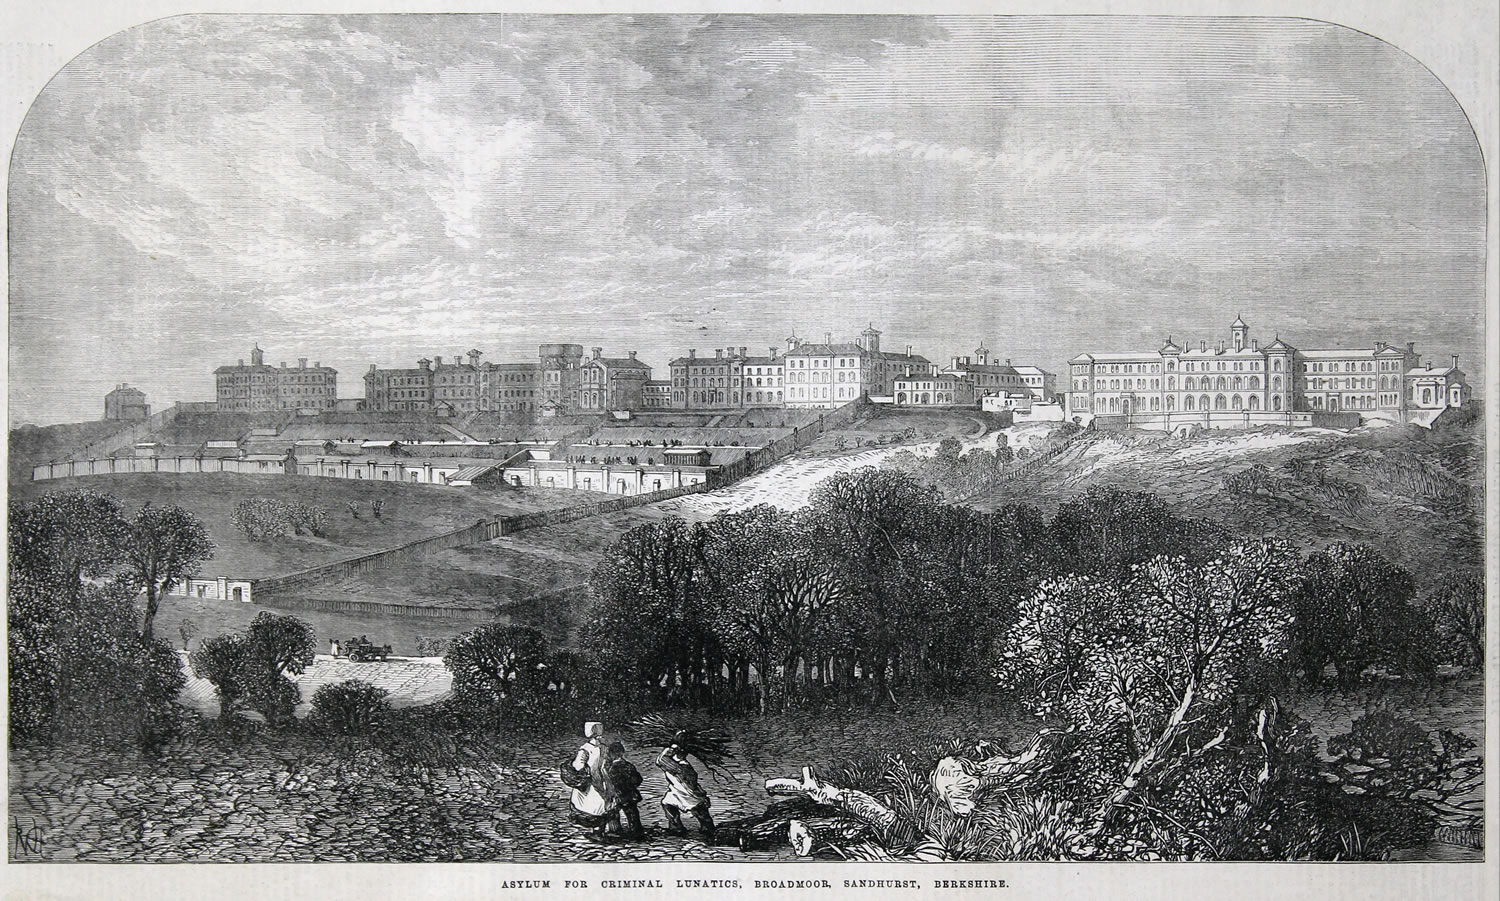 Asylum for Criminal Lunatics, Broadmoor, Sandhurst, Berkshire from The Illustrated London News August 24, 1867